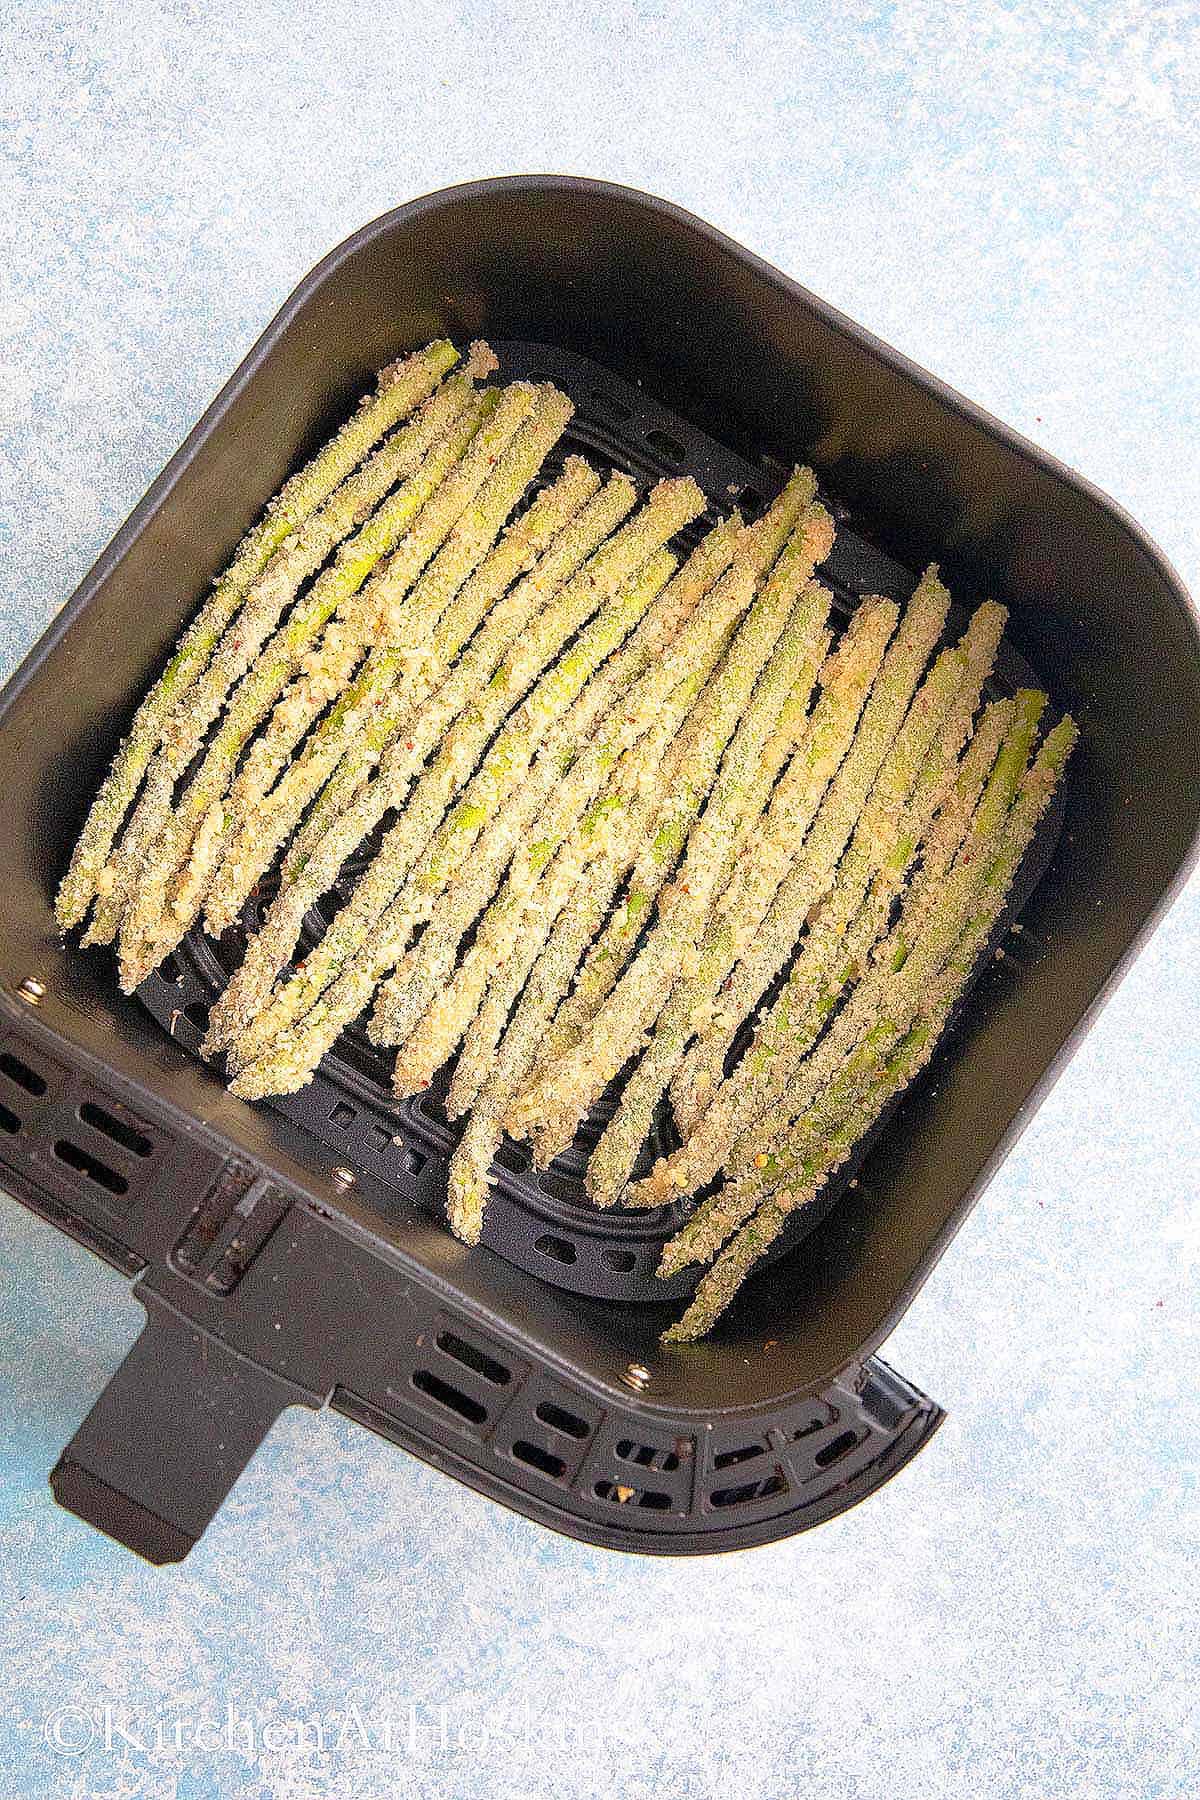 air fryer basket with breaded asparagus.